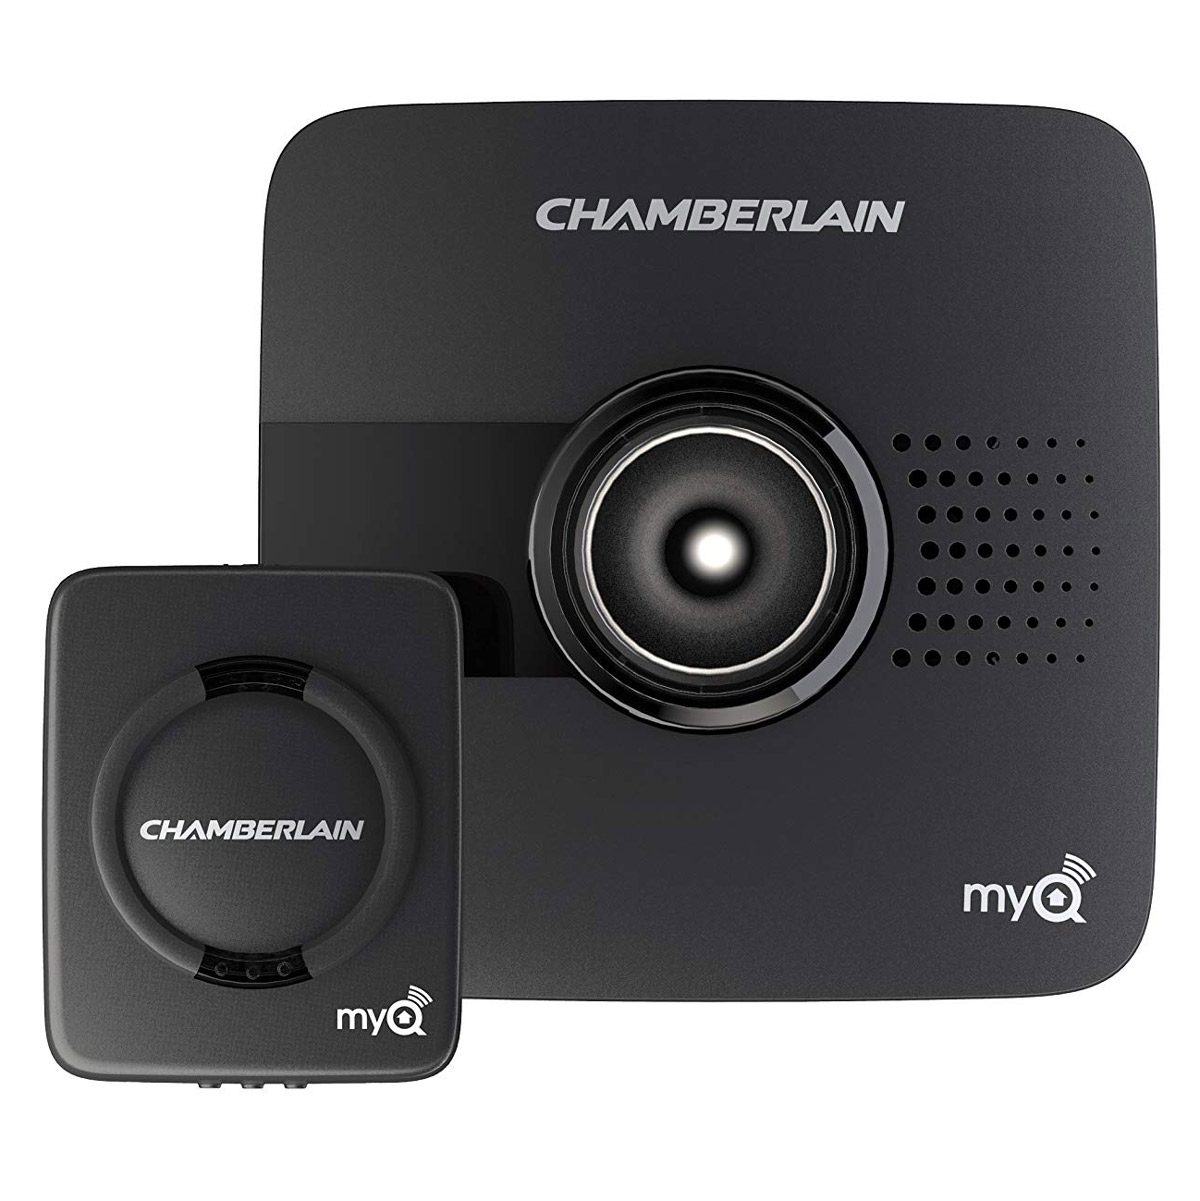 Chamberlain-myQ